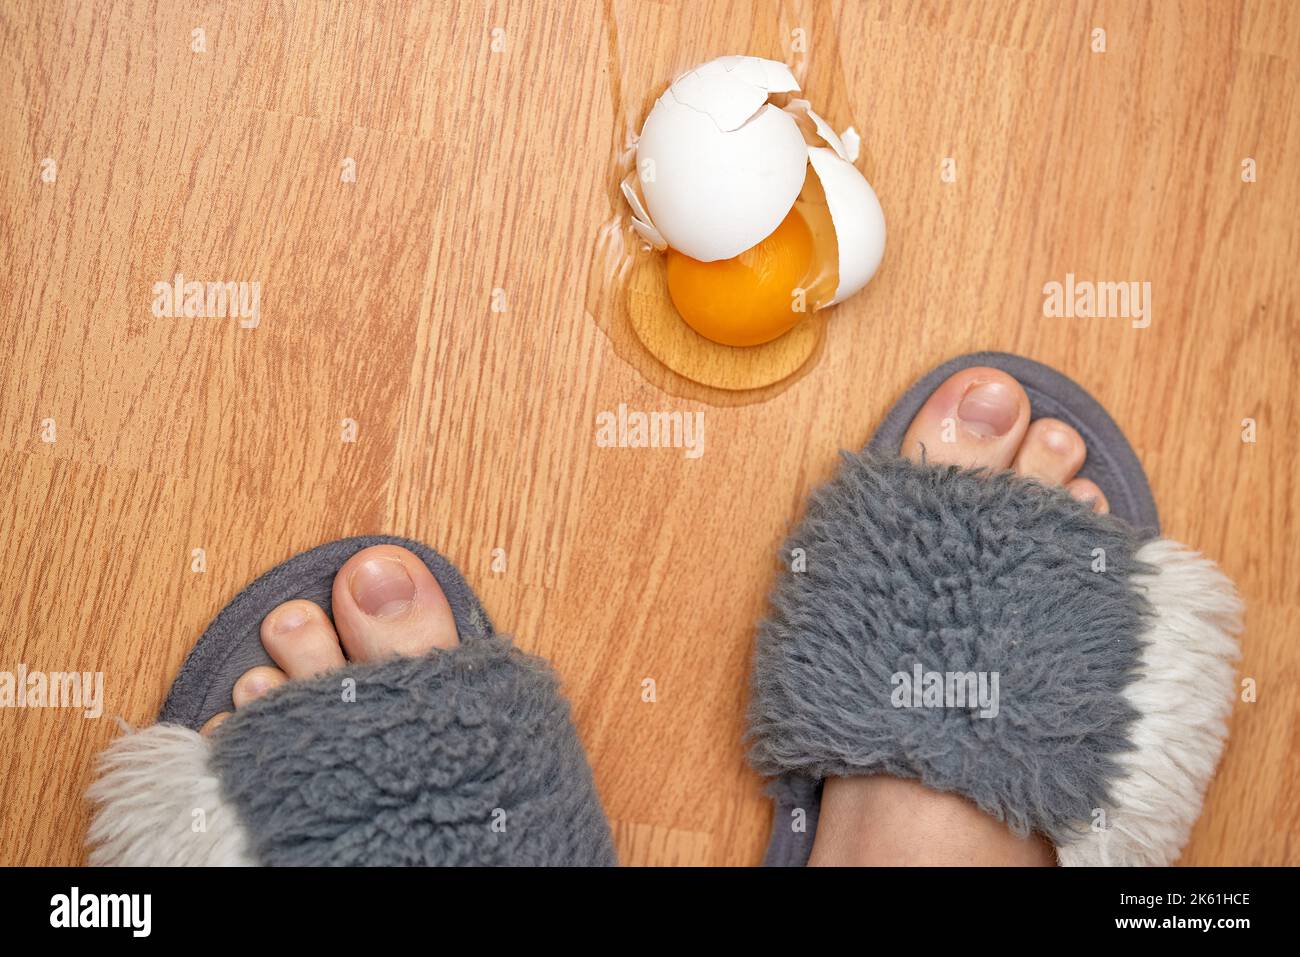 broken egg and feet on the floor in kitchen Stock Photo